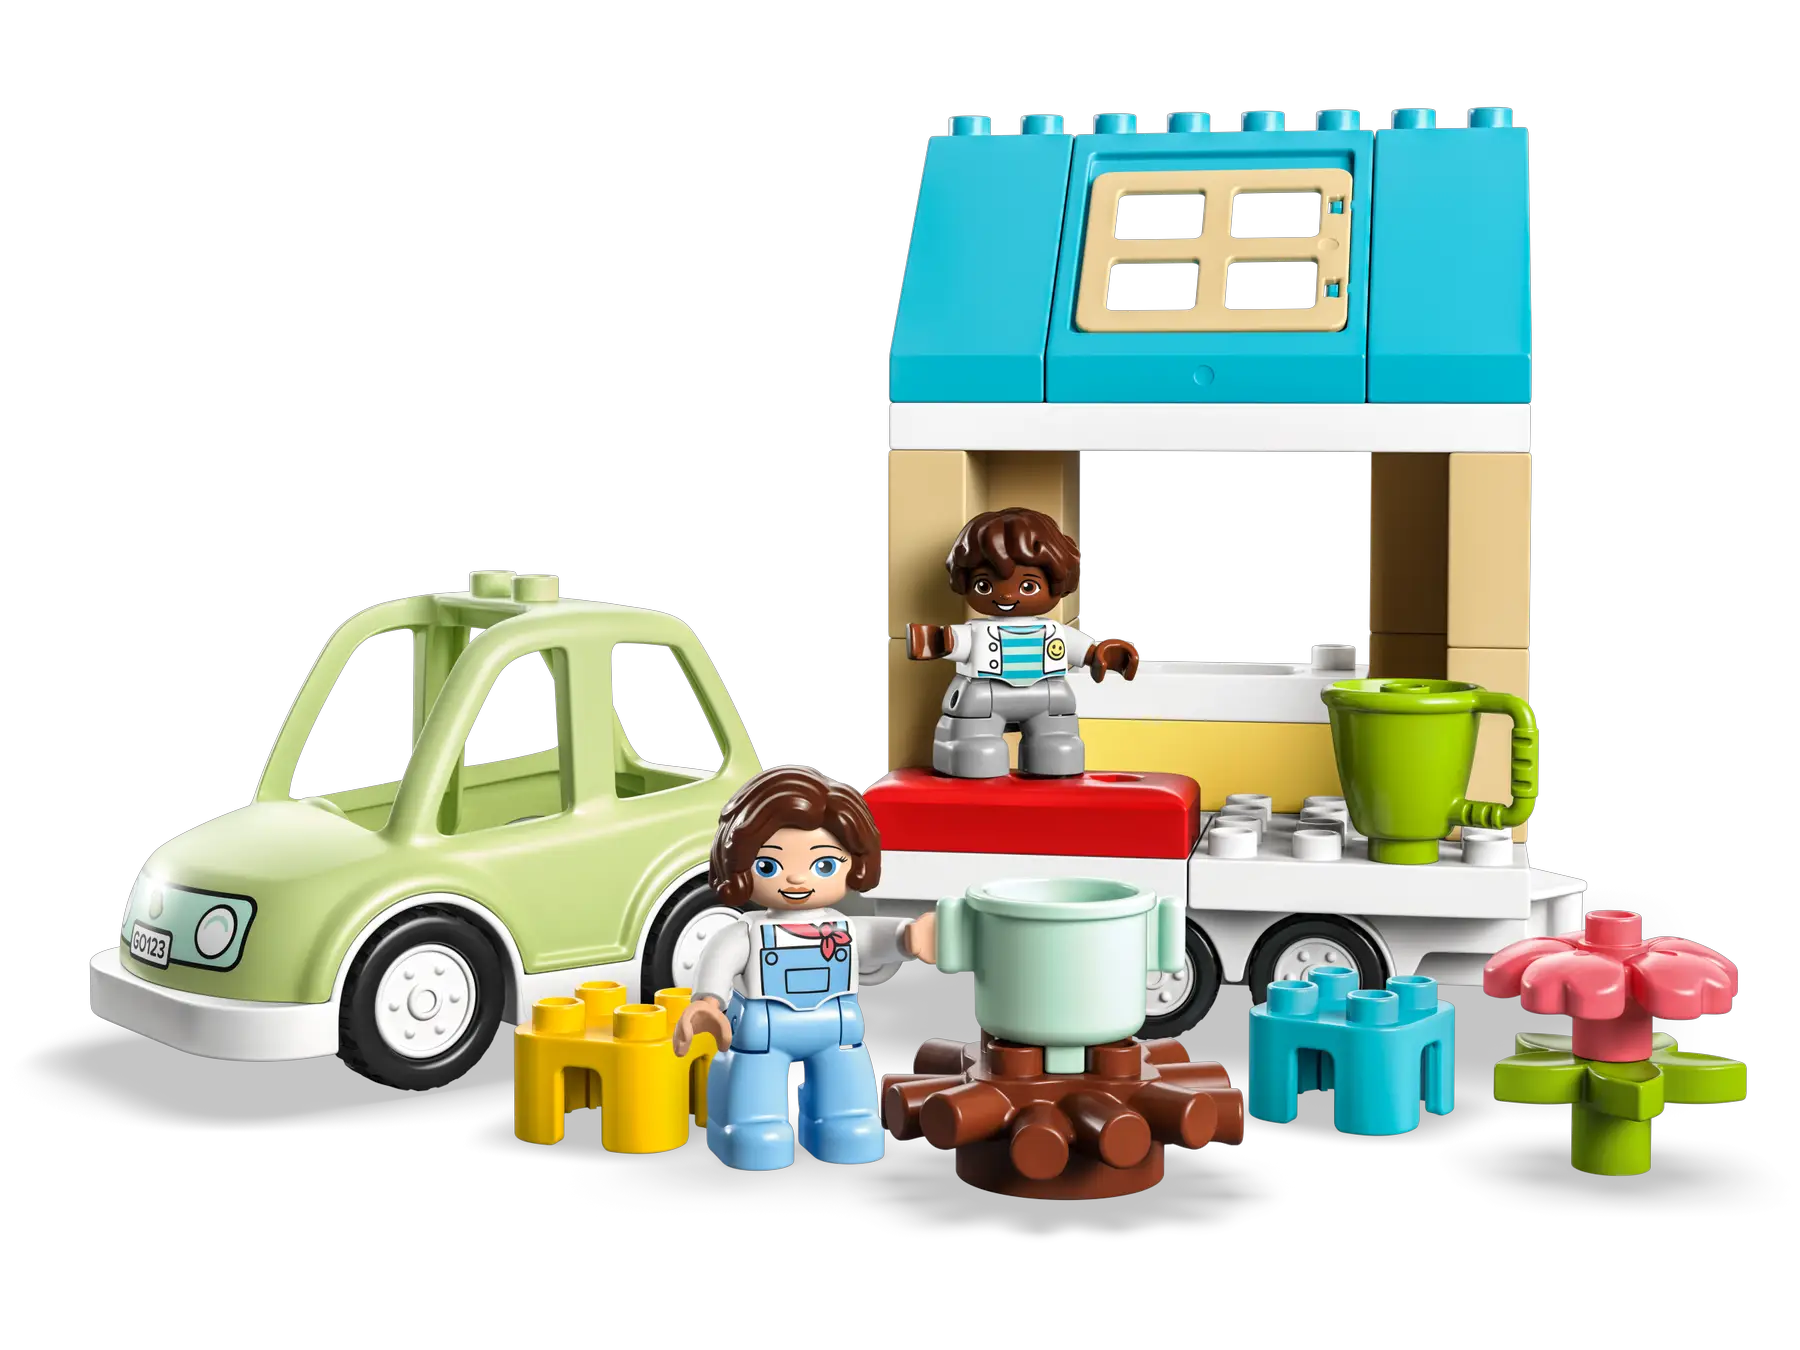 Lego Duplo Family House on Wheels